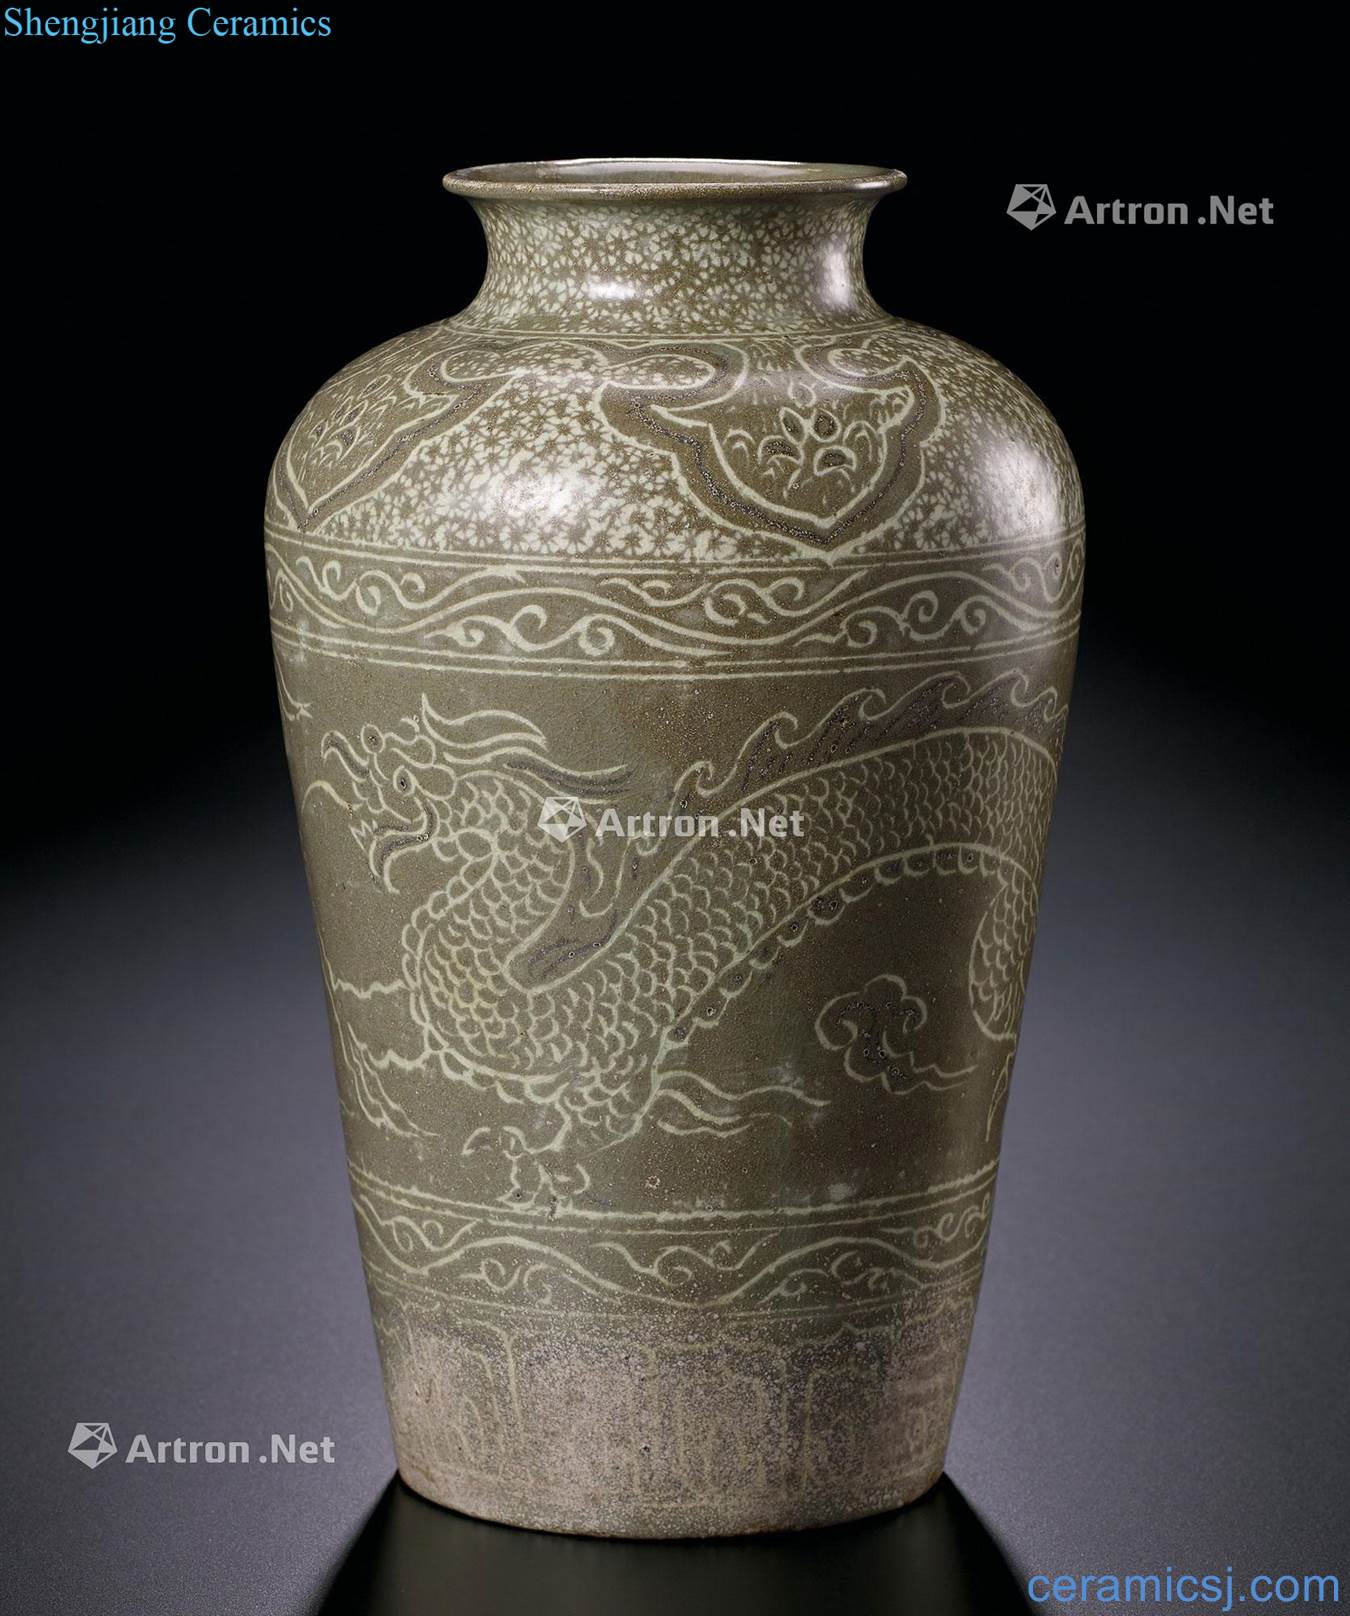 The 13th century Koryo celadon dragon bottle